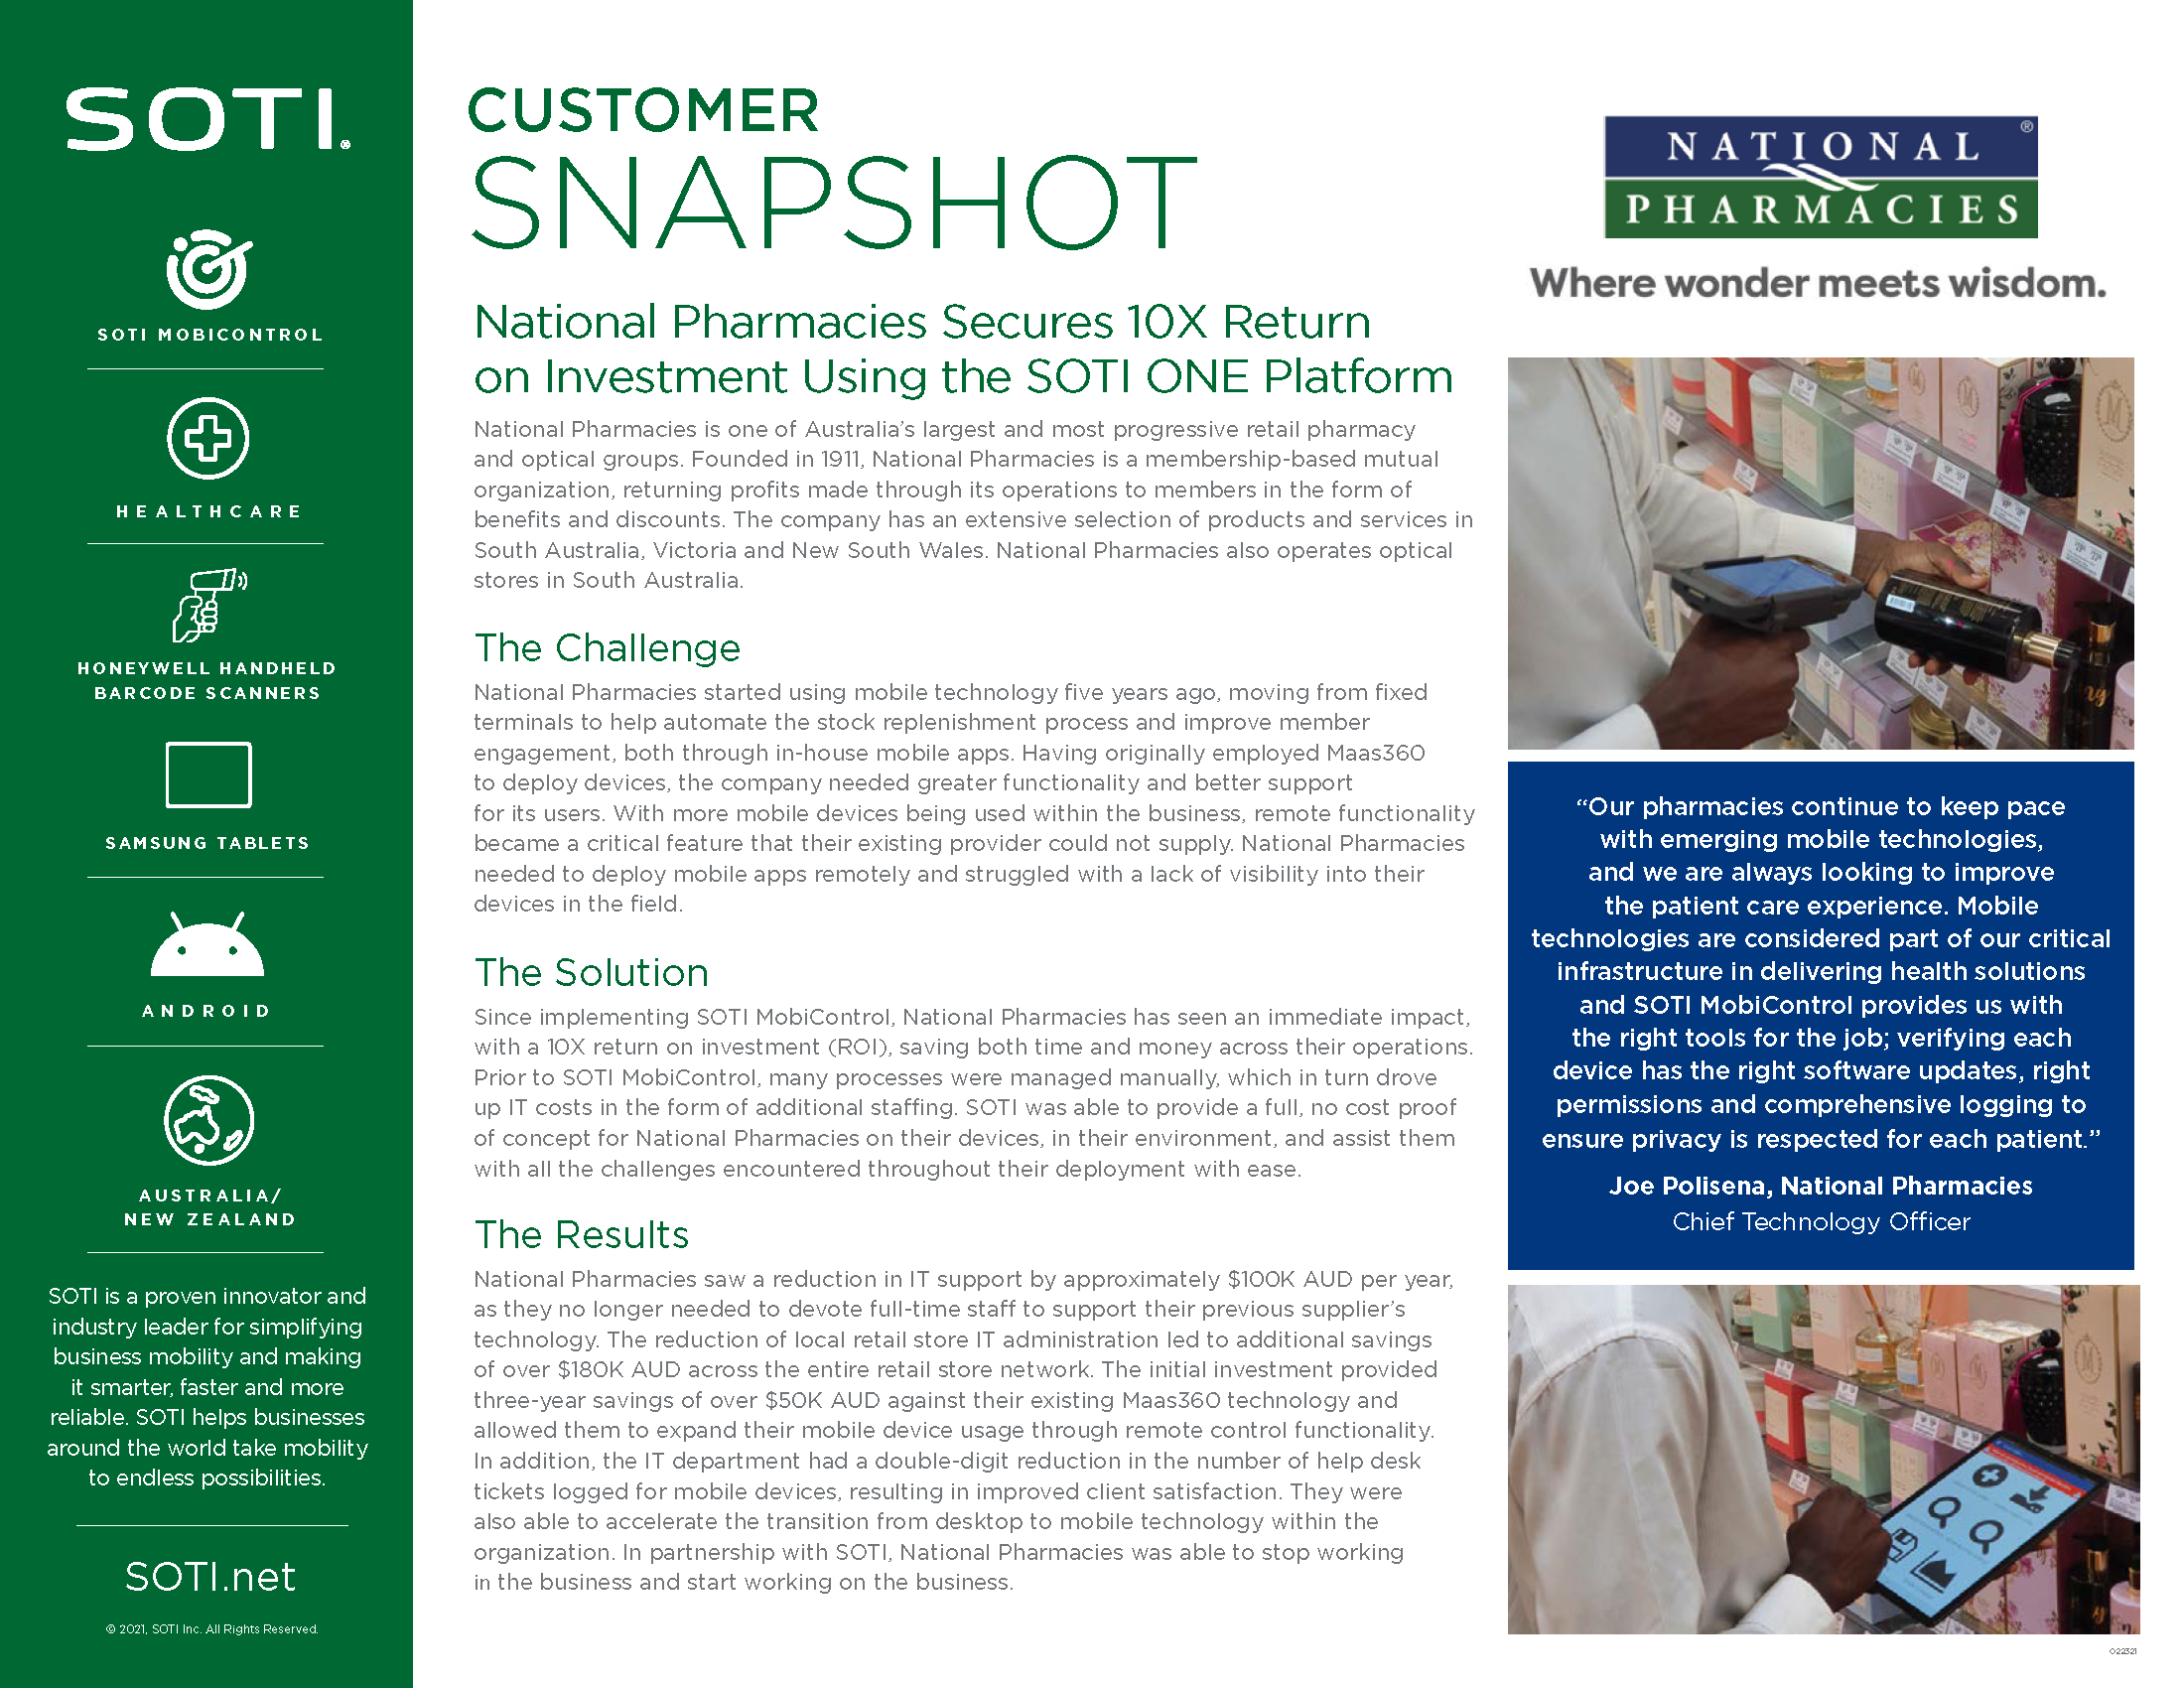 National Pharmacies Case Study